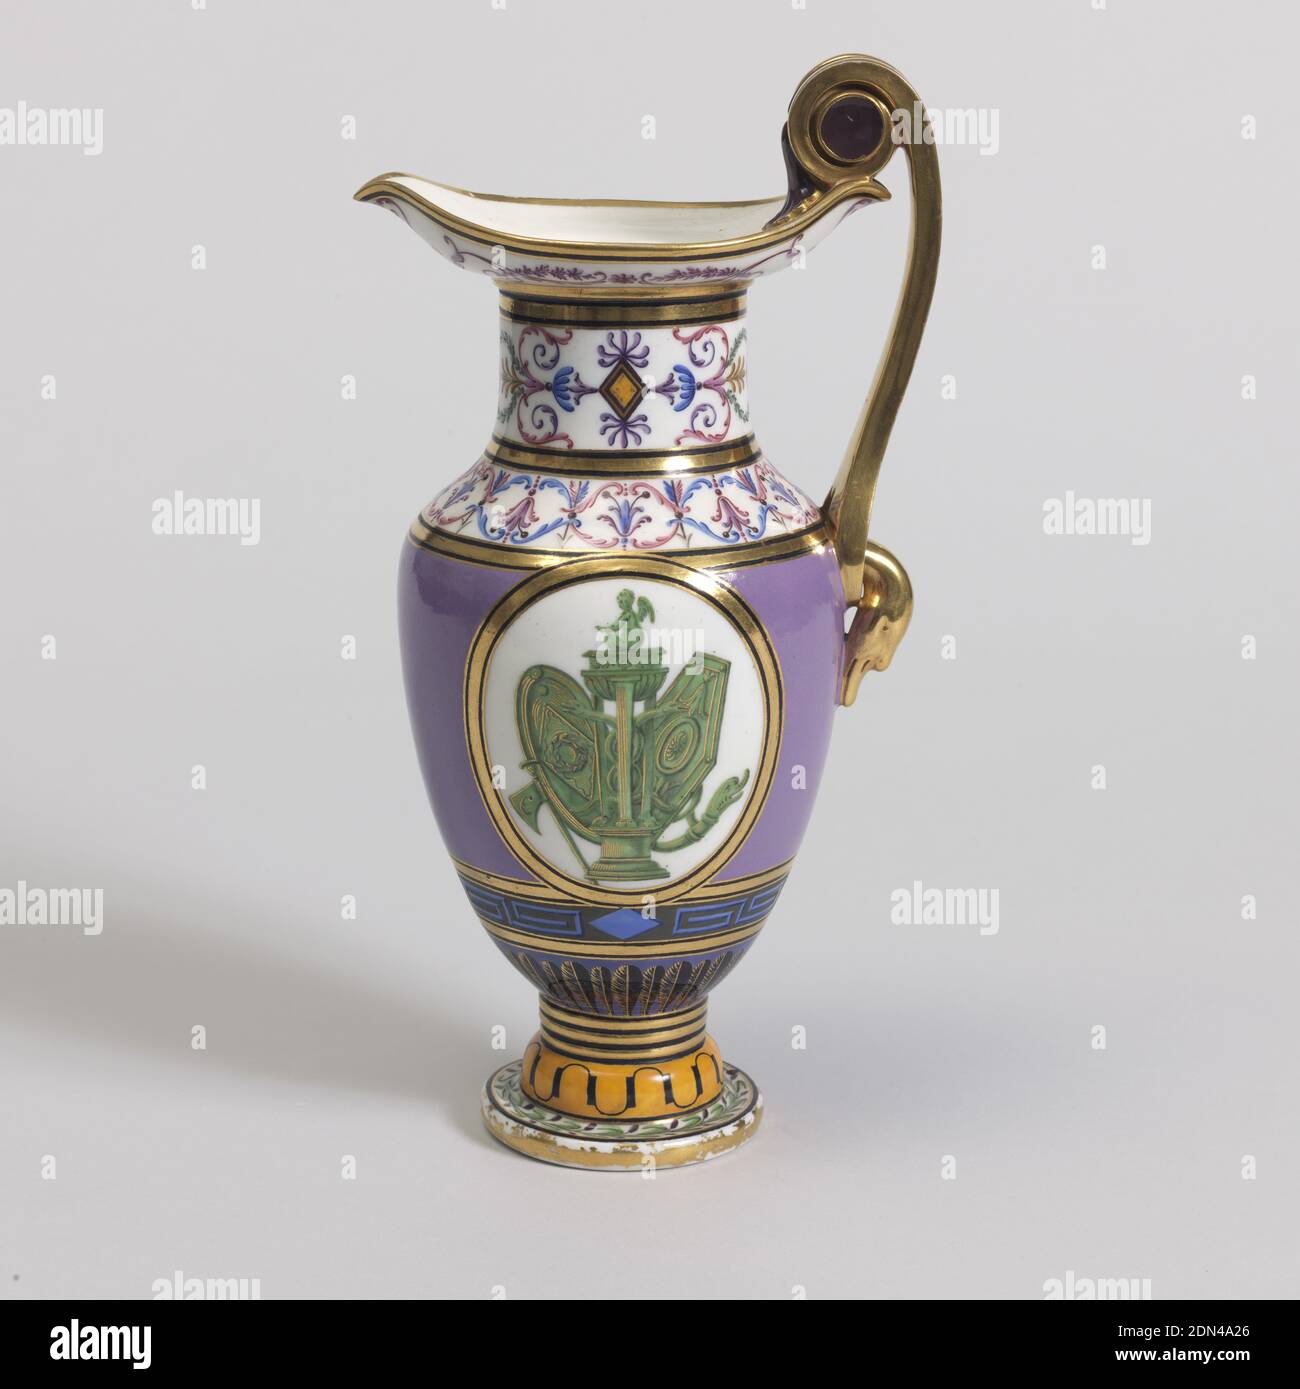 Ewer, Sèvres Porcelain Manufactory, French, established 1756 to the present, hard paste porcelain, vitreous enamel, gold, France, ca. 1800, ceramics, Decorative Arts, ewer, ewer Stock Photo